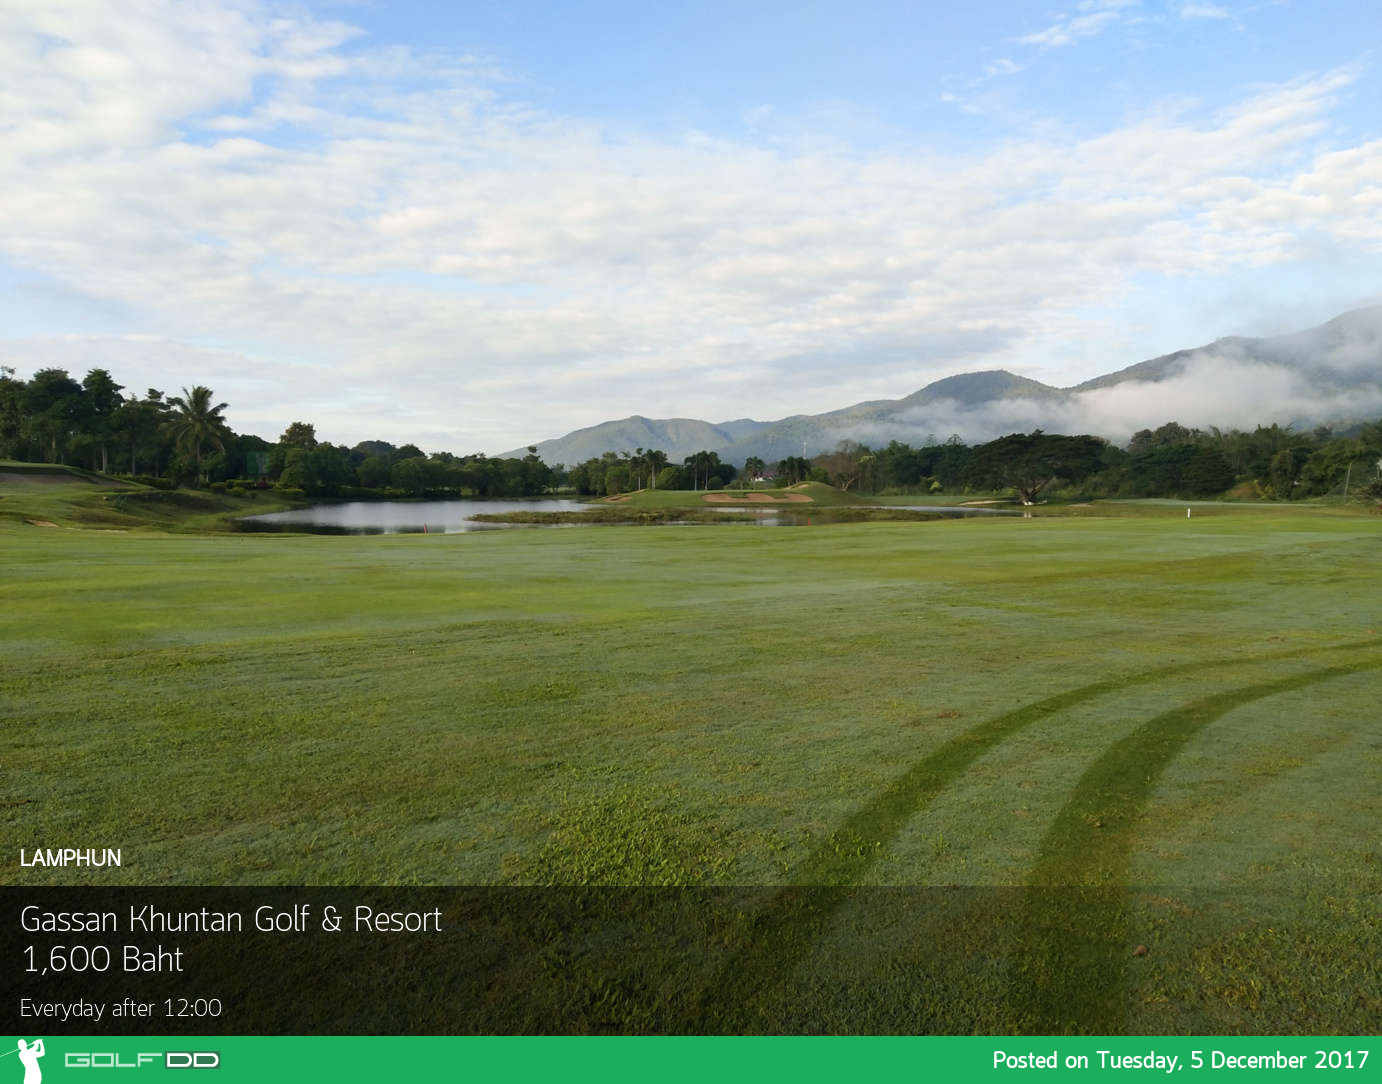 Gassag Khuntan Golf & Resort  - ขอใช้คำว่า สนามกอล์ฟ สวยทุกองศา จริงๆ 